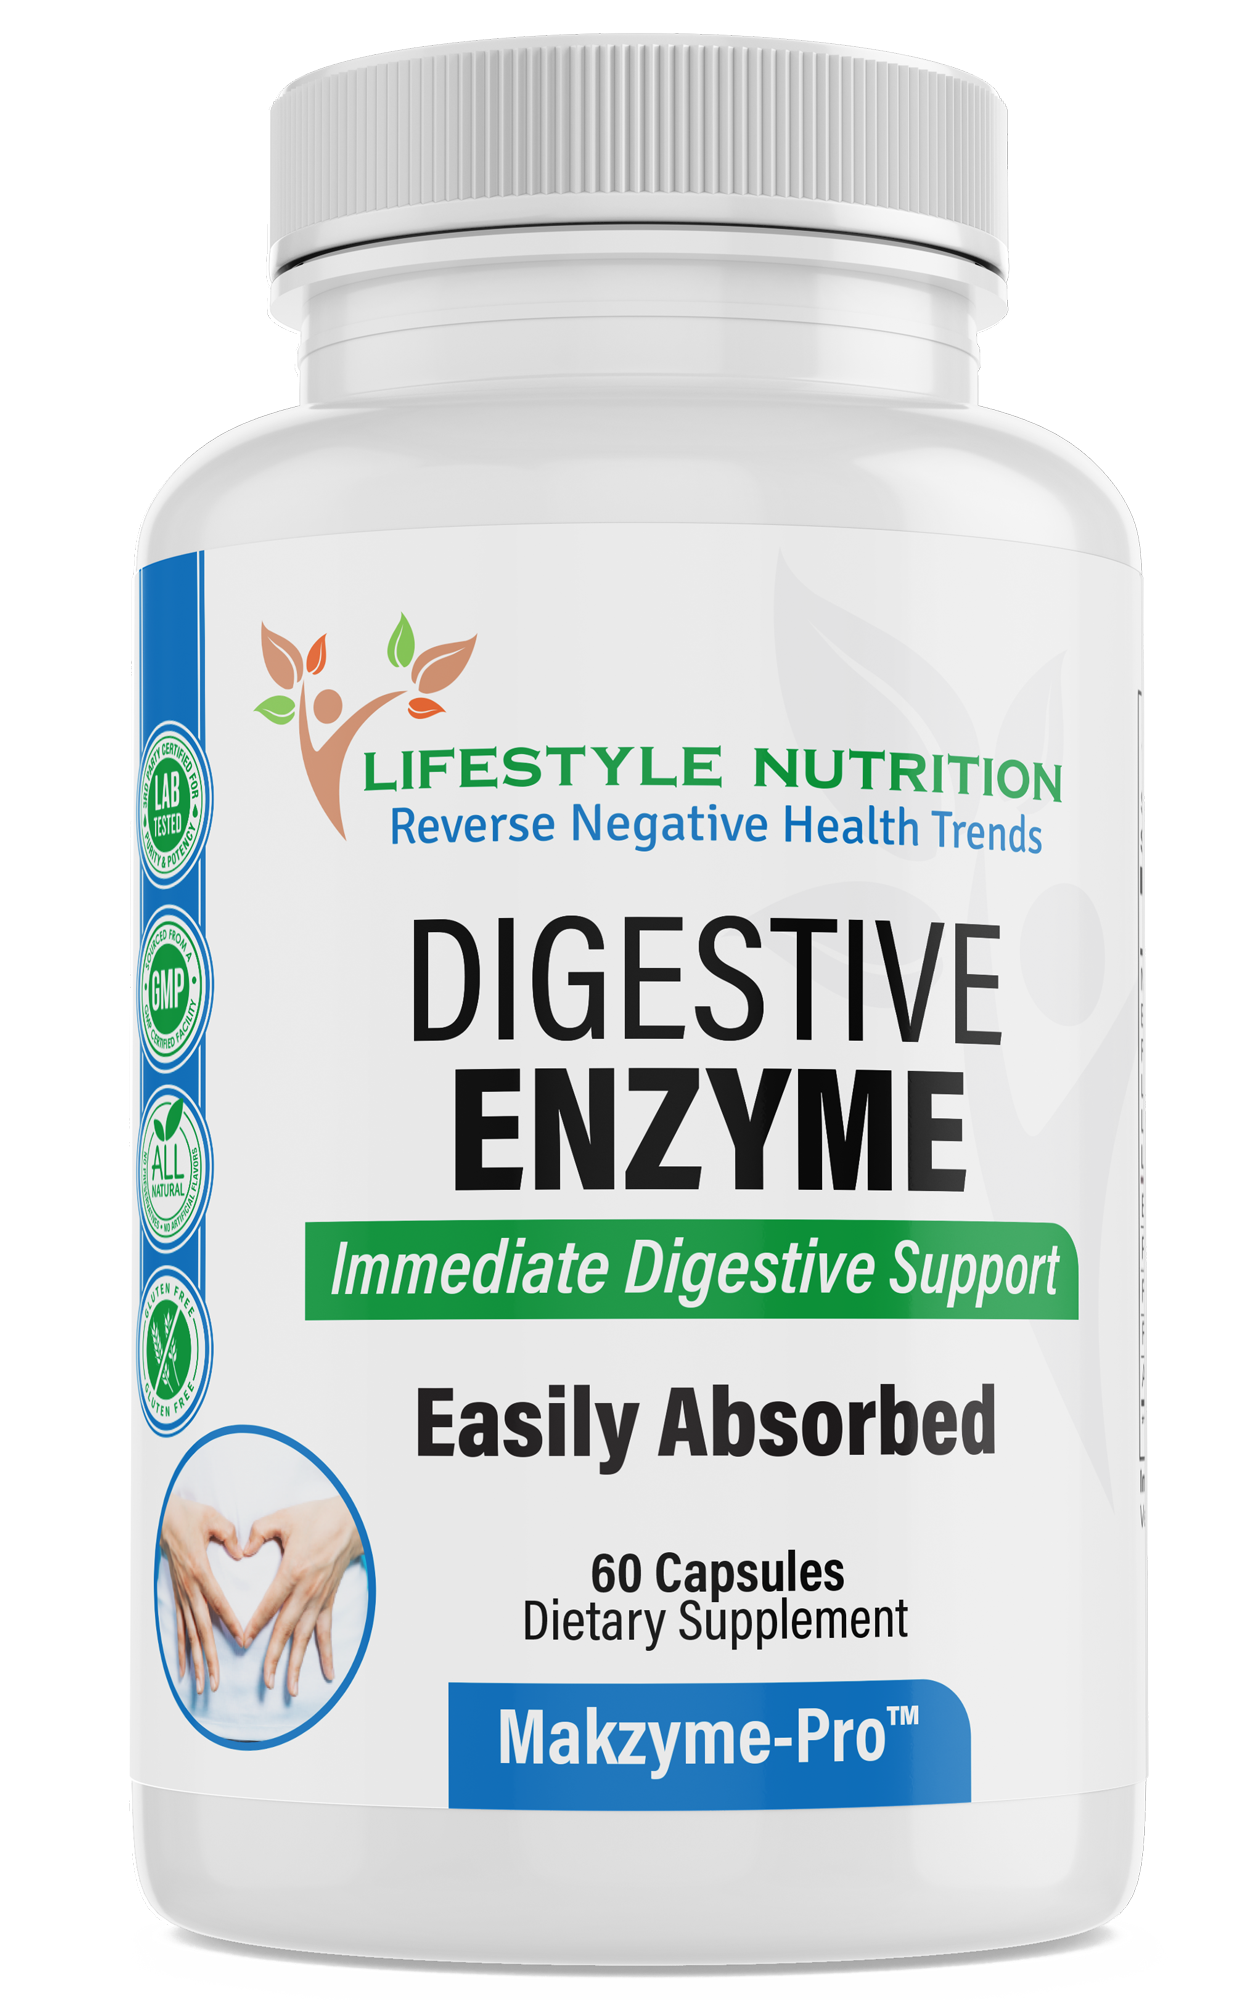 Digestive Enzyme - Immediate Digestive Support